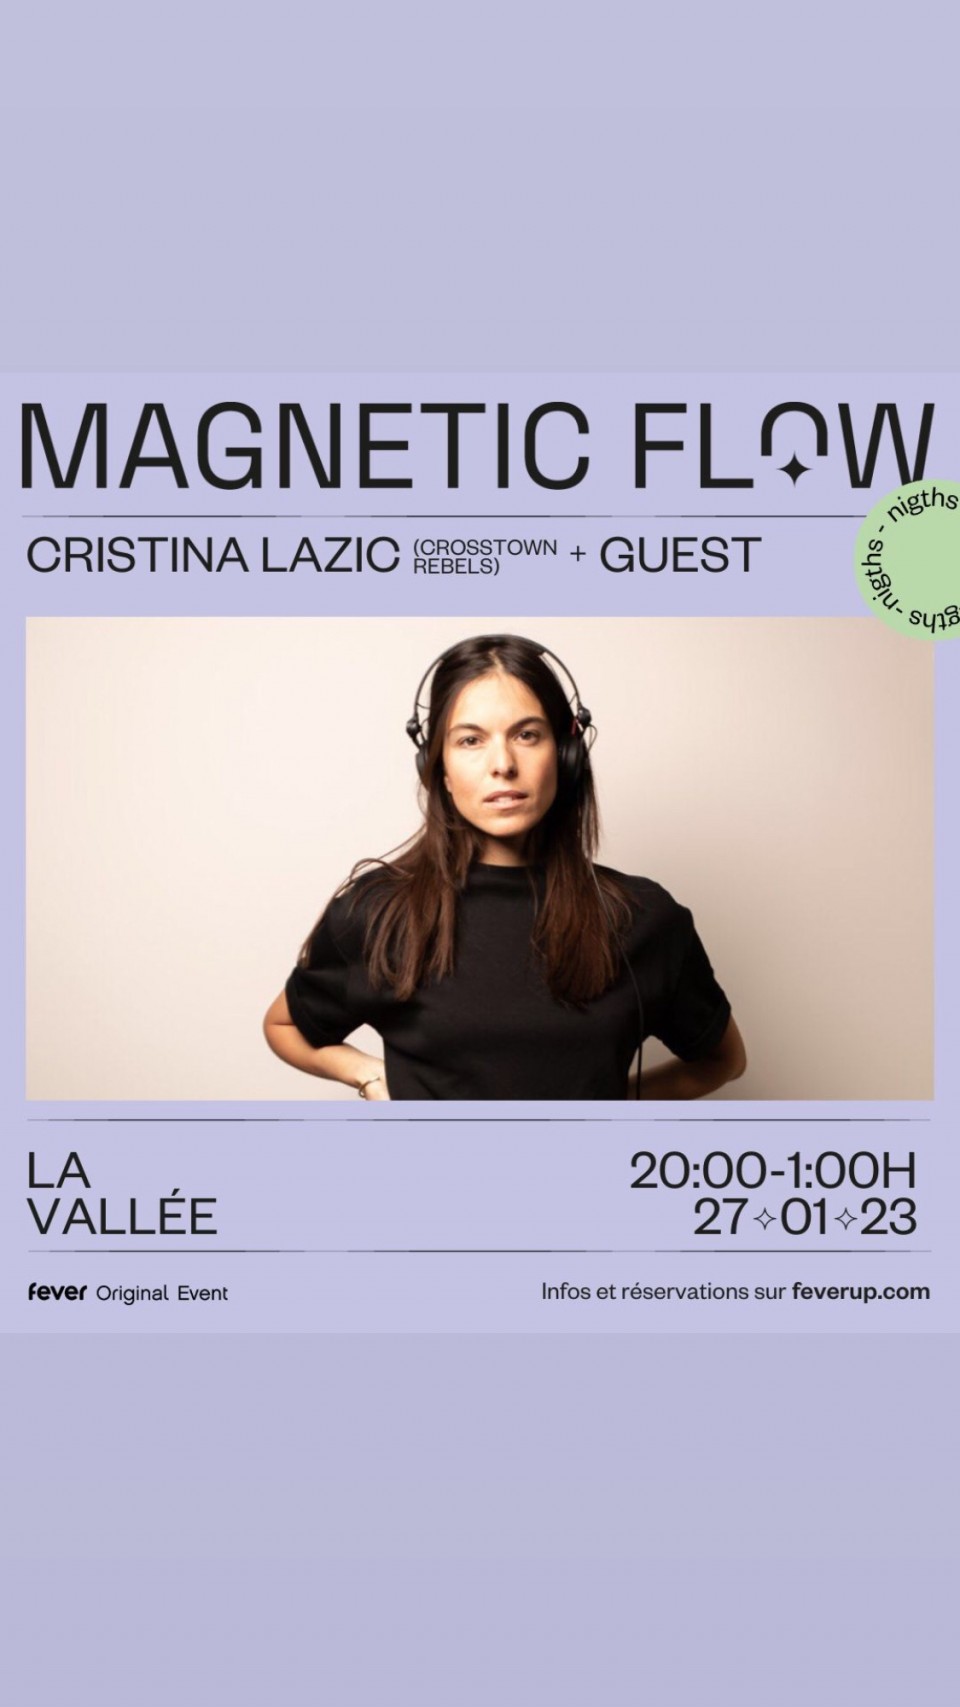 Cristina Lazic at Magnetic Flow